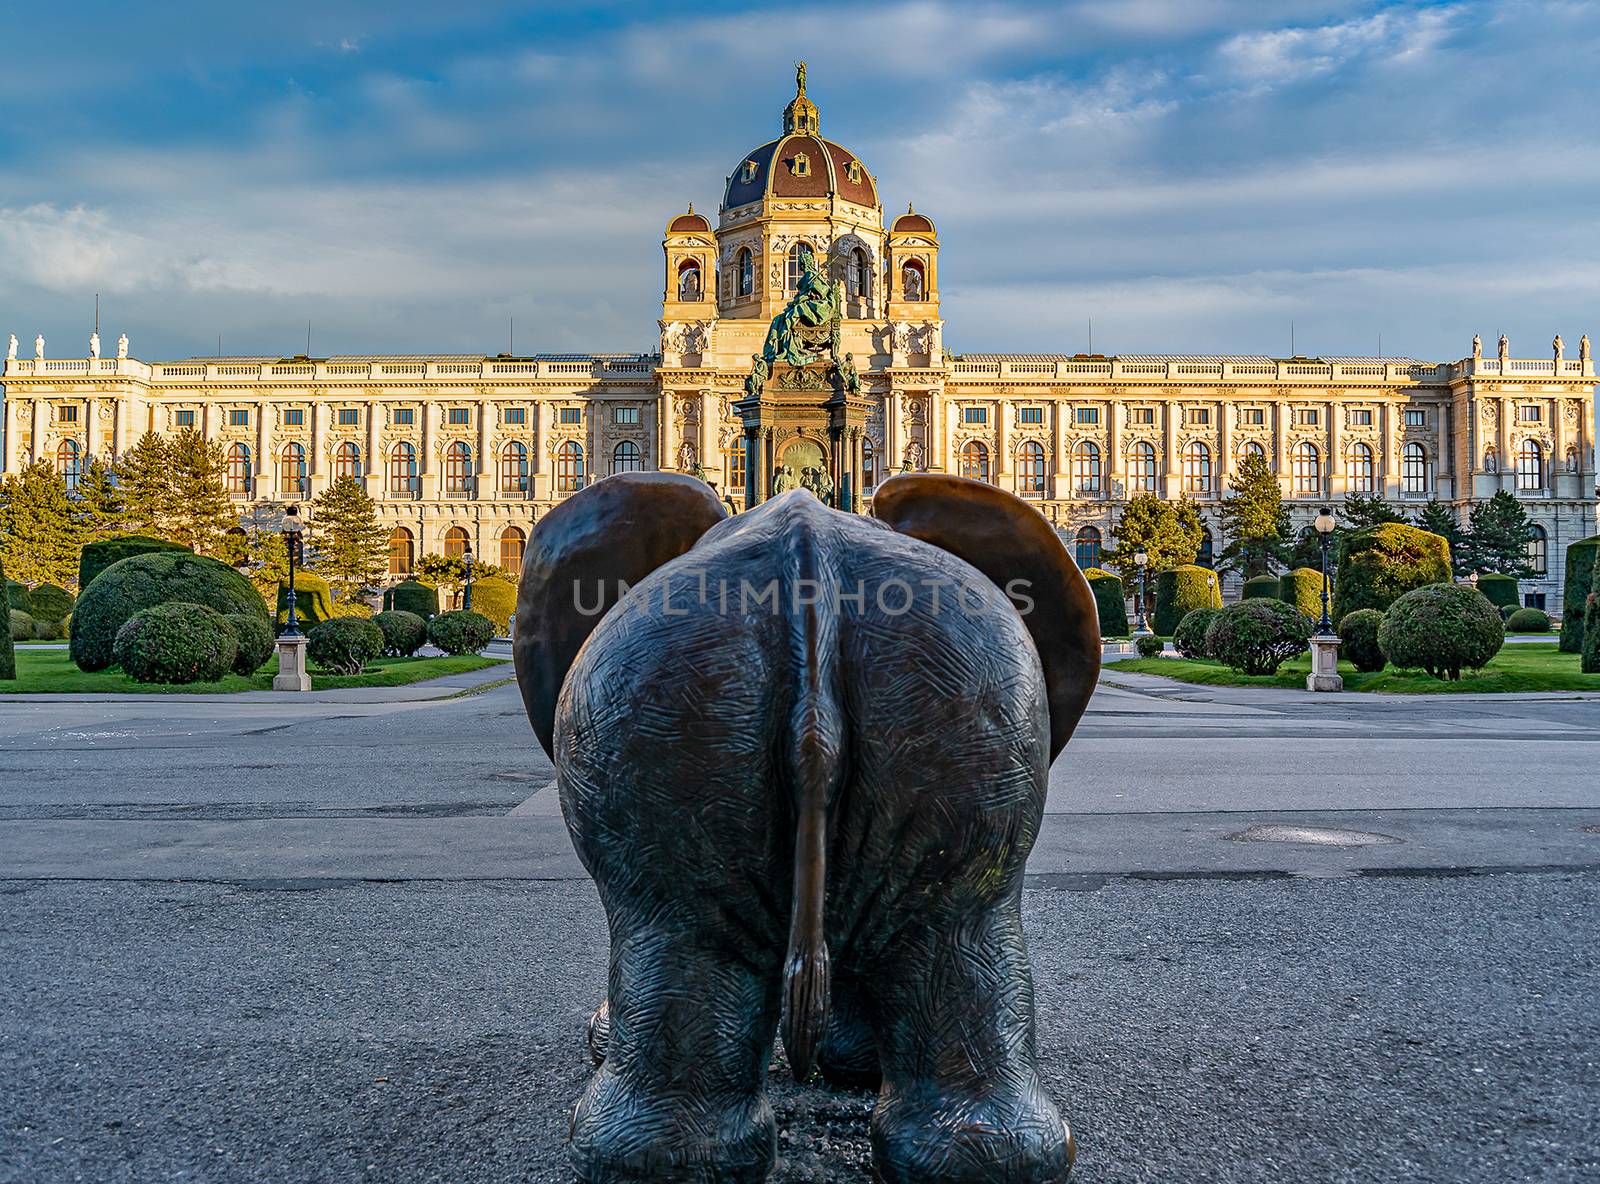 Afrikanischer Elefant', sculpture by Gottfried Kumpf, in front of the statue of Maria Theresa and the Kunsthistorisches Museum in Vienna, Vienna, Austria, Europe